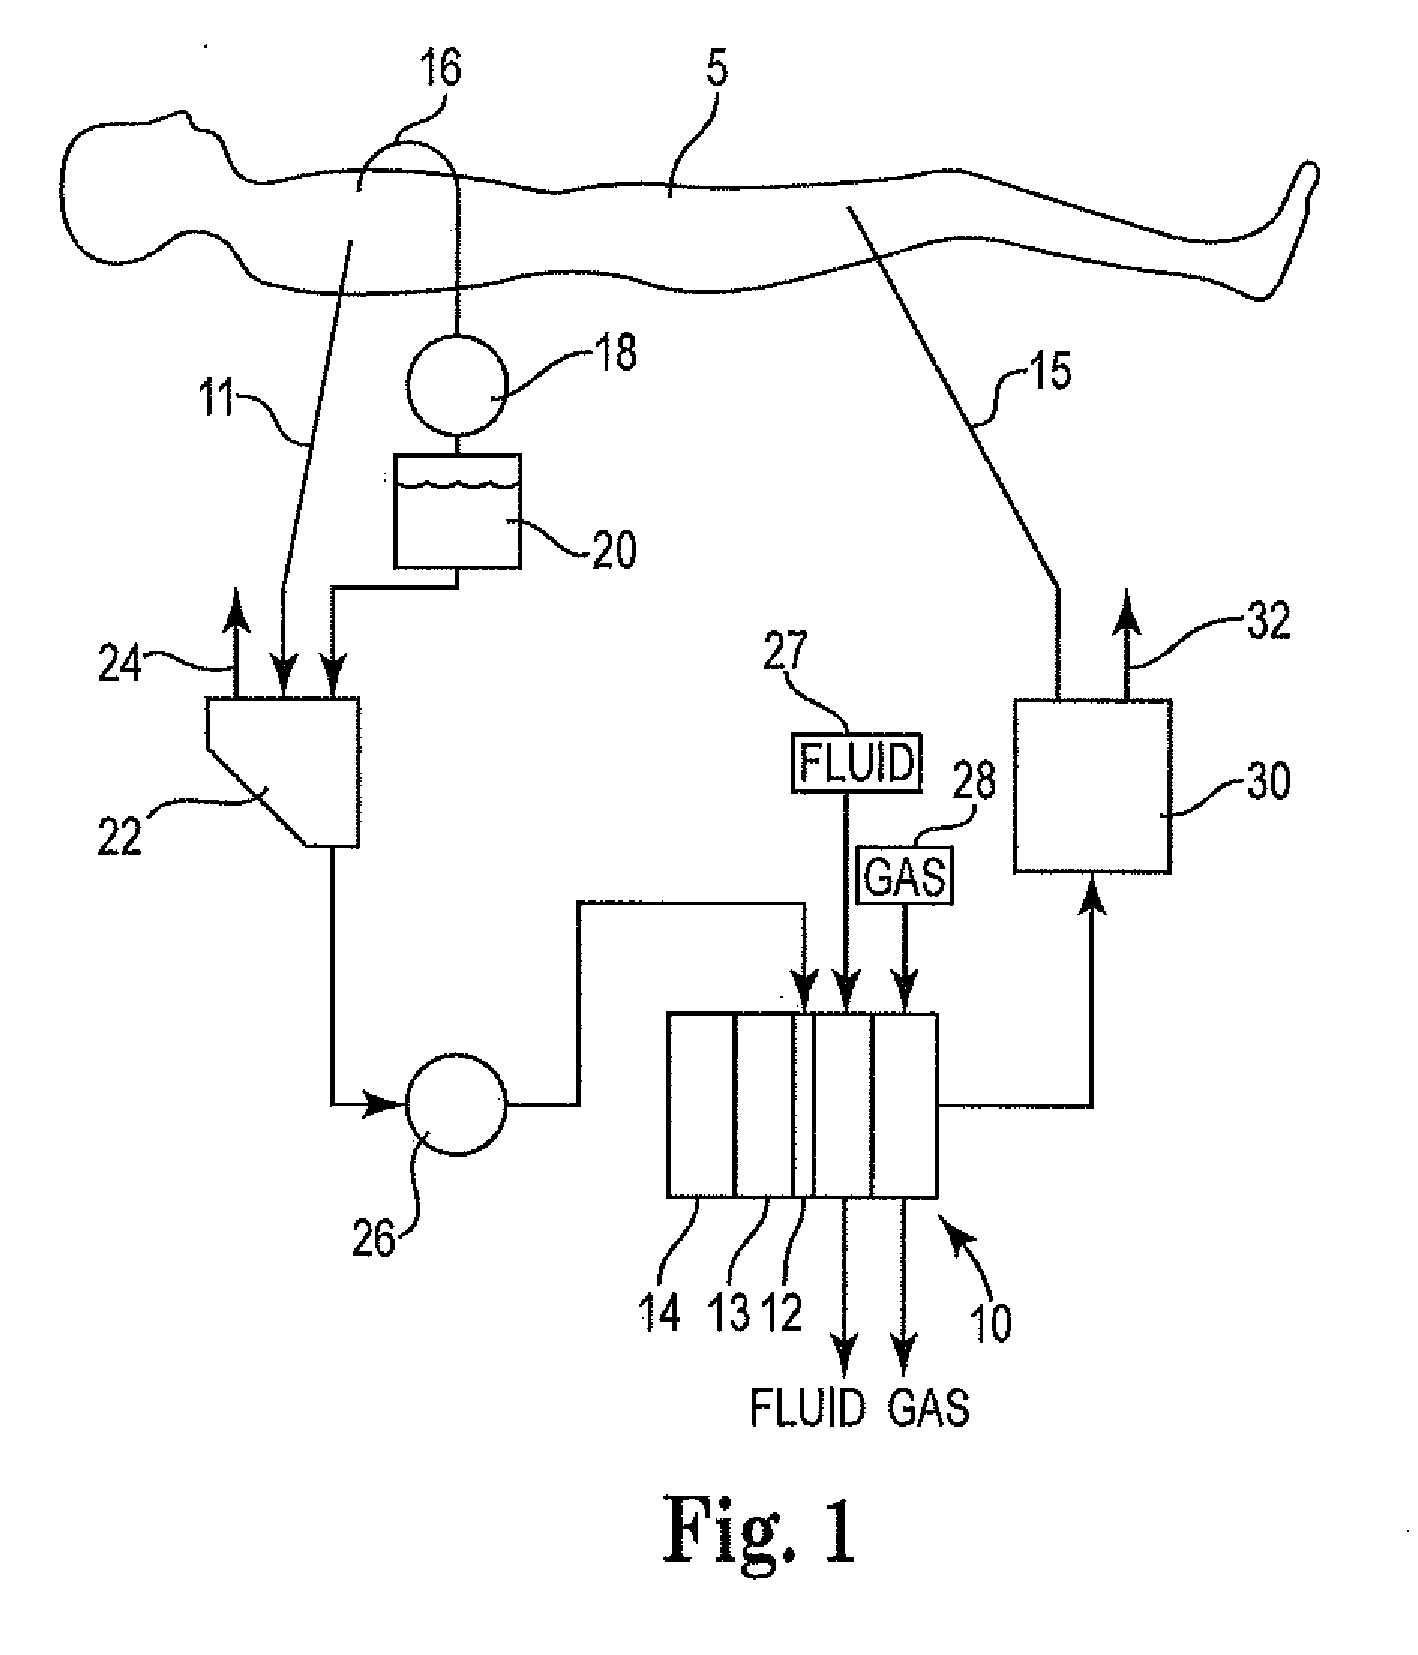 Radial design oxygenator with heat exchanger and inlet mandrel